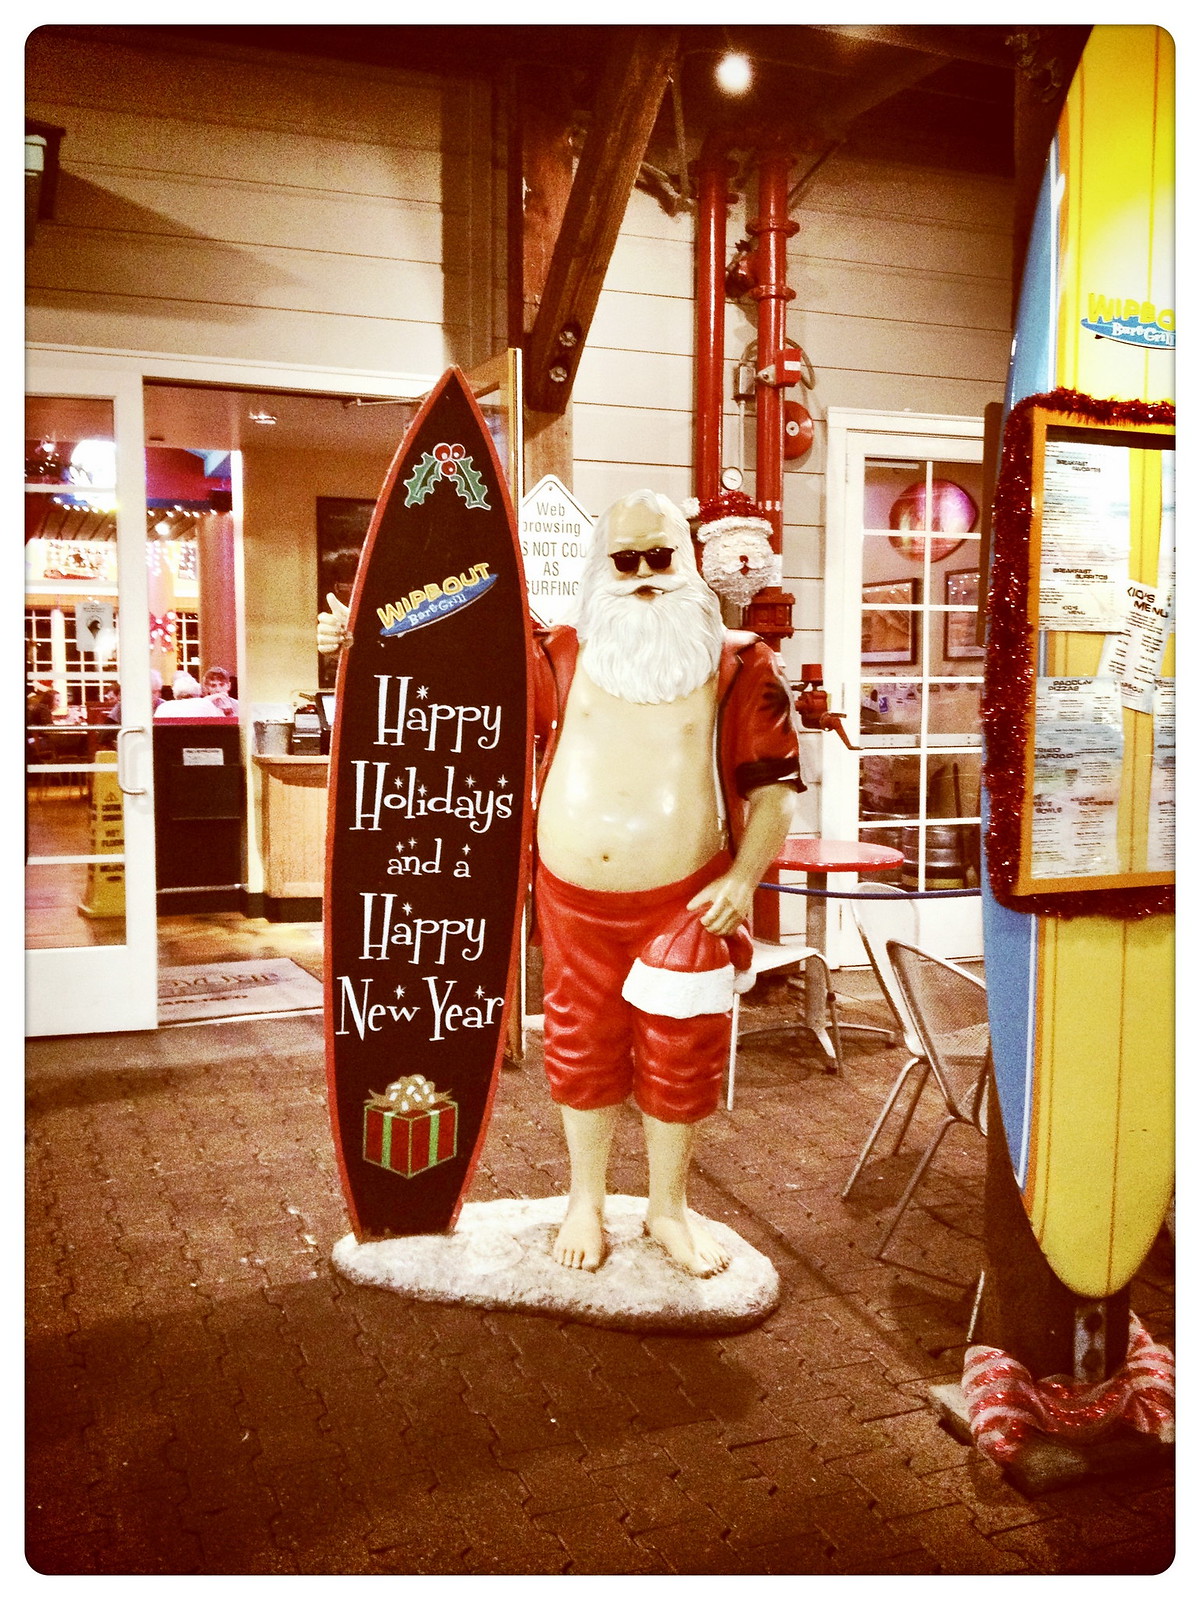 Surfin' Santa